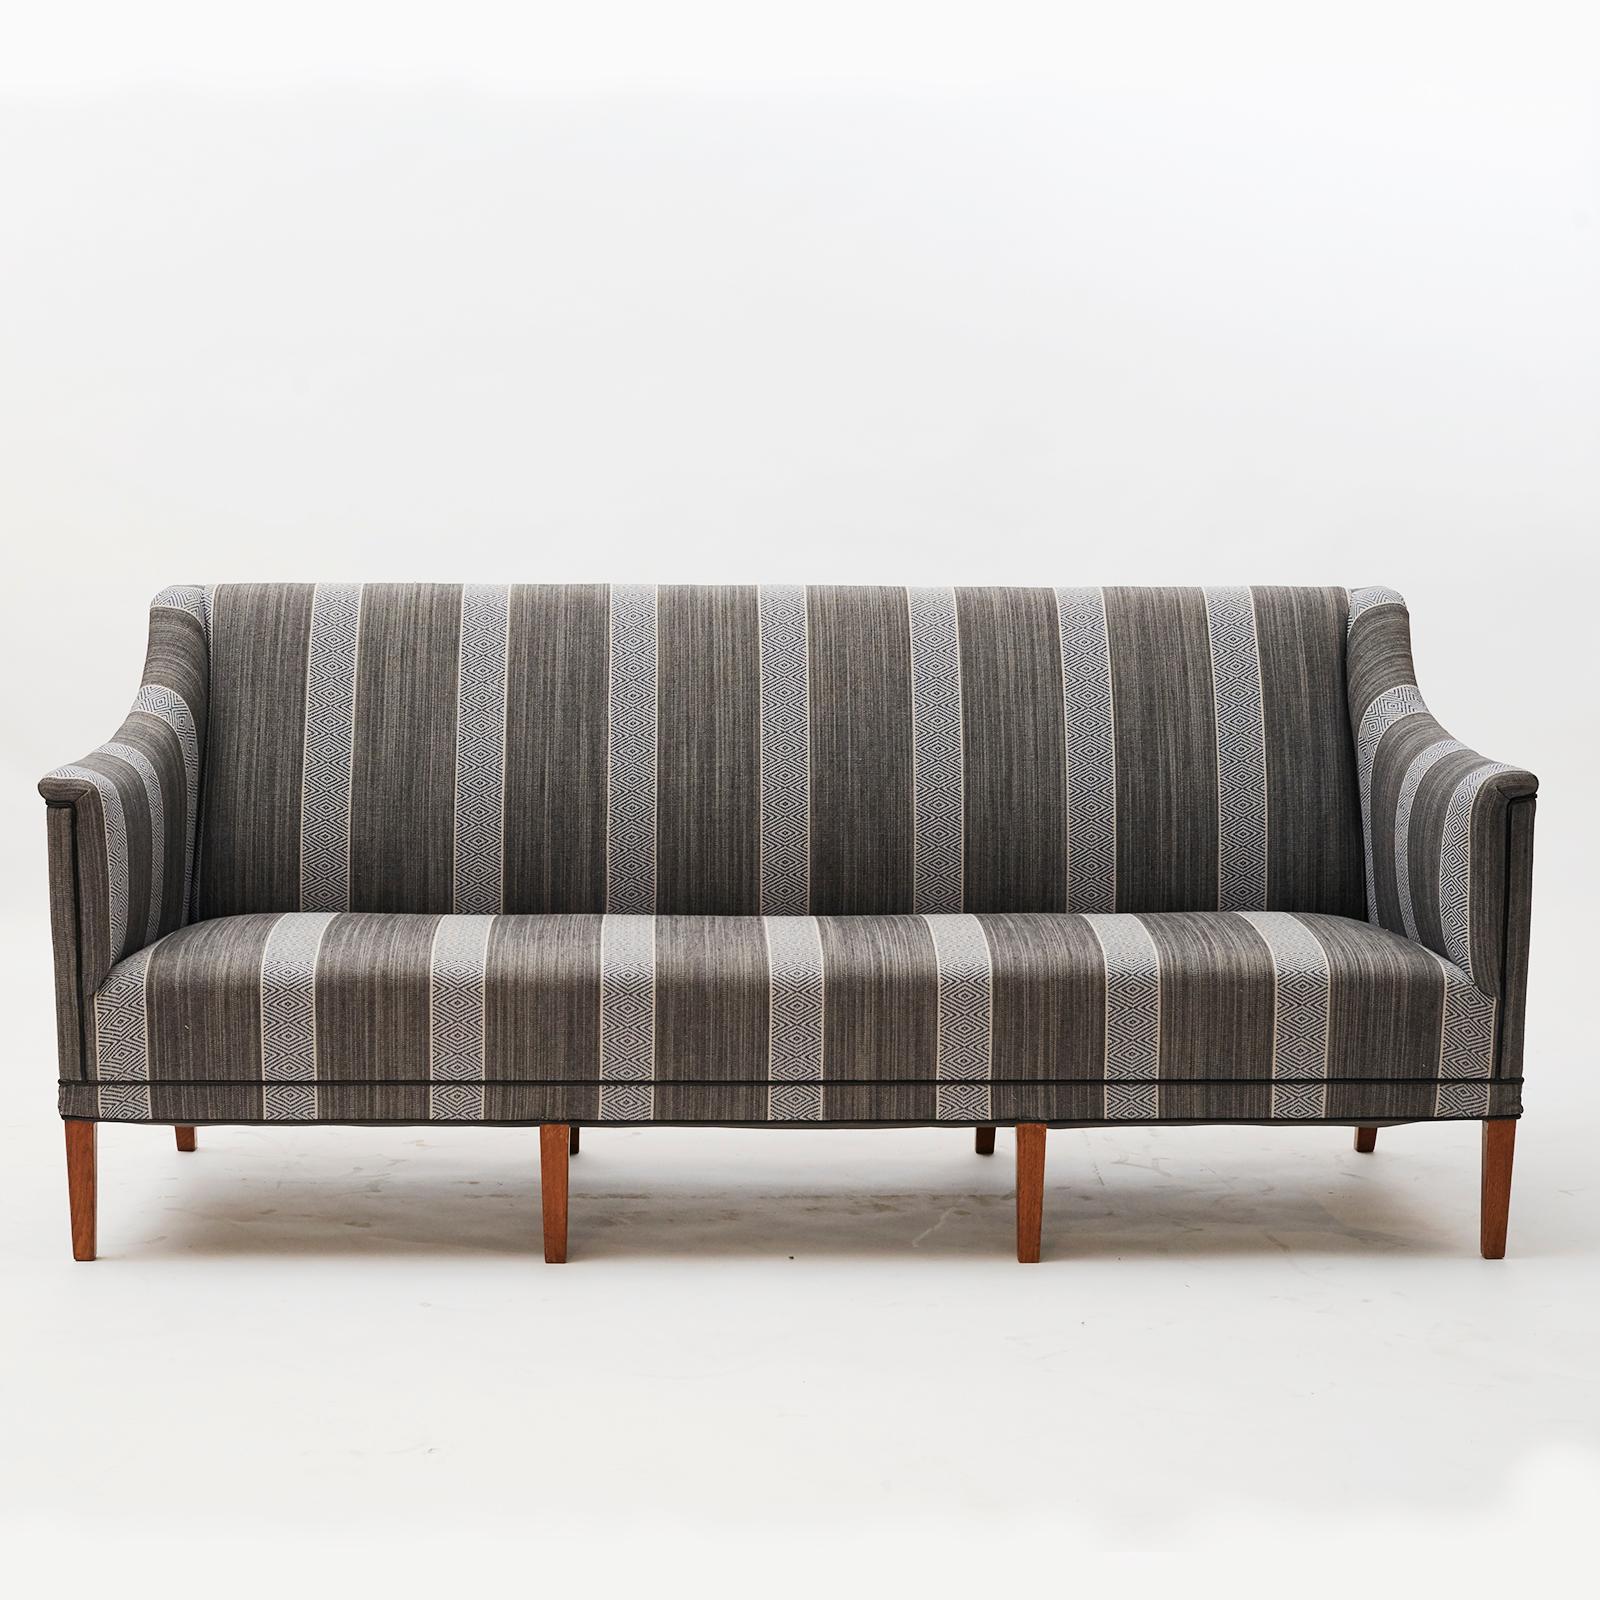 Kaare Klint (1888-1954) 3seat vintage sofa. Model KK 6092, designed in 1940, performed by Rud. Rasmussen. Newly reupholstered in fabric from 